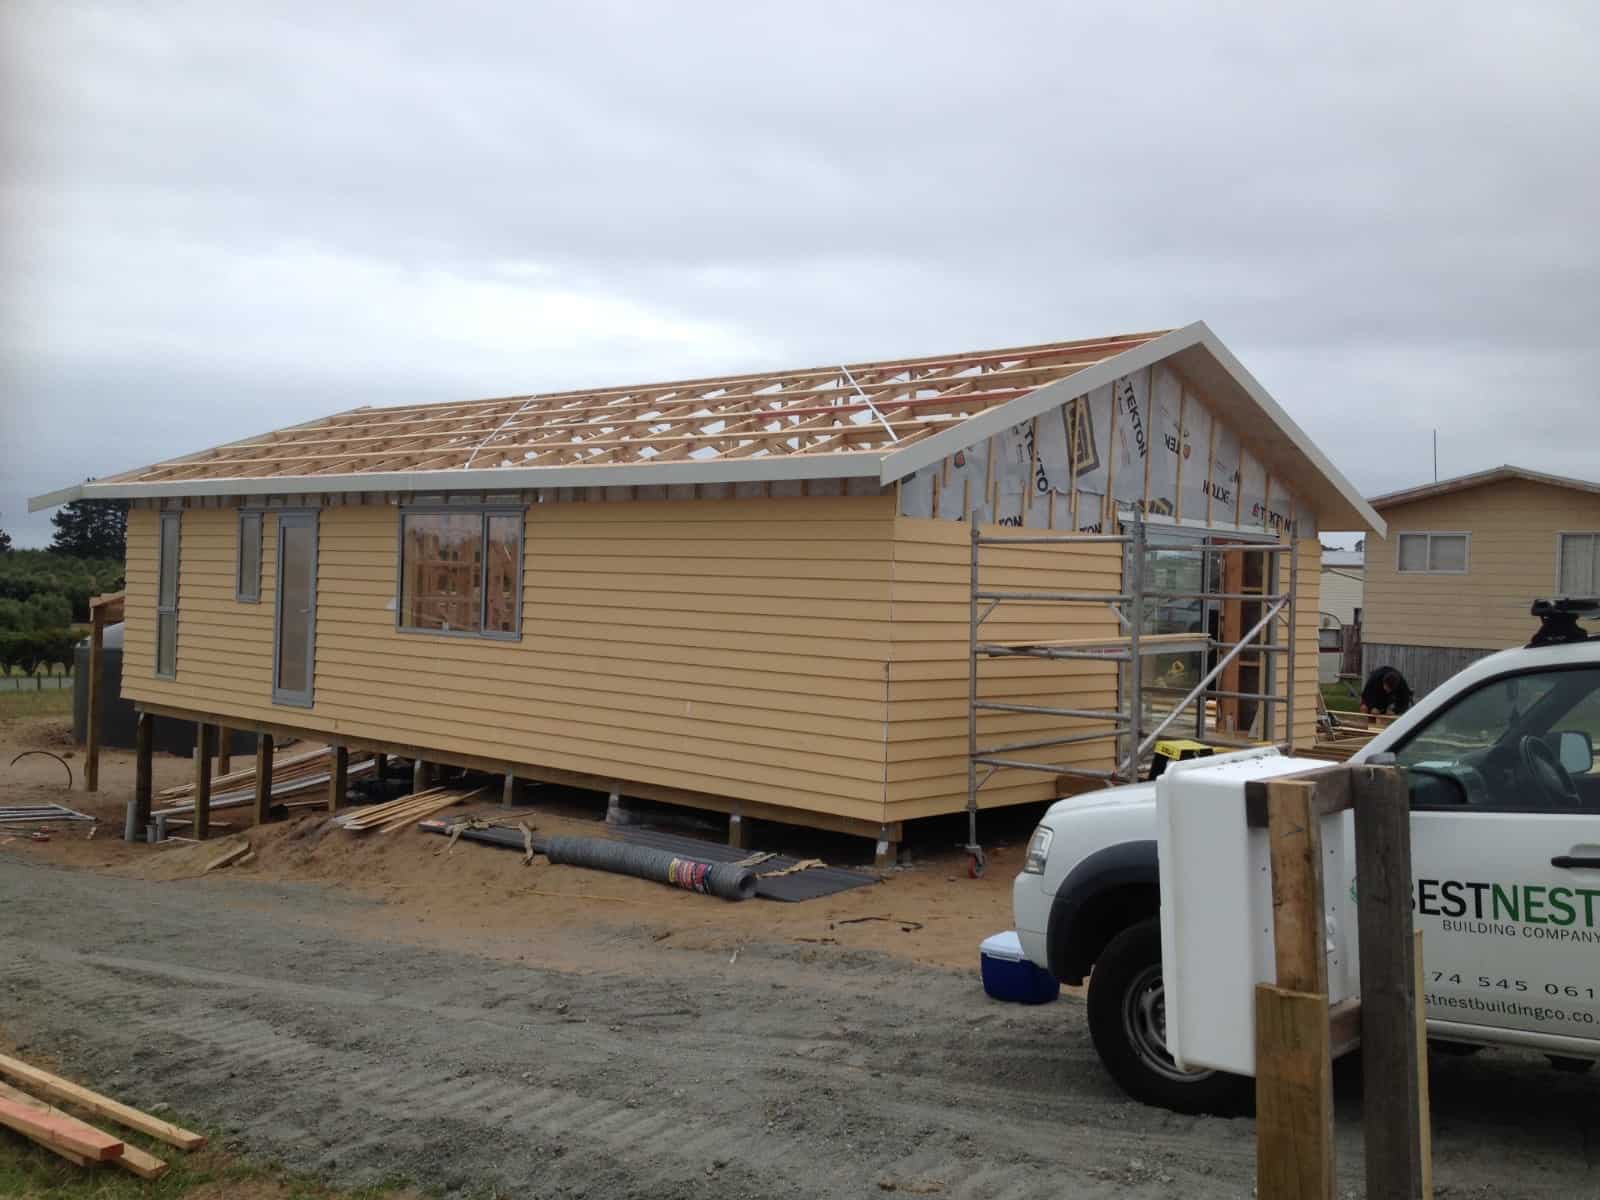 Meet Our Team, Best Nest Building Co | Professional Auckland Builders